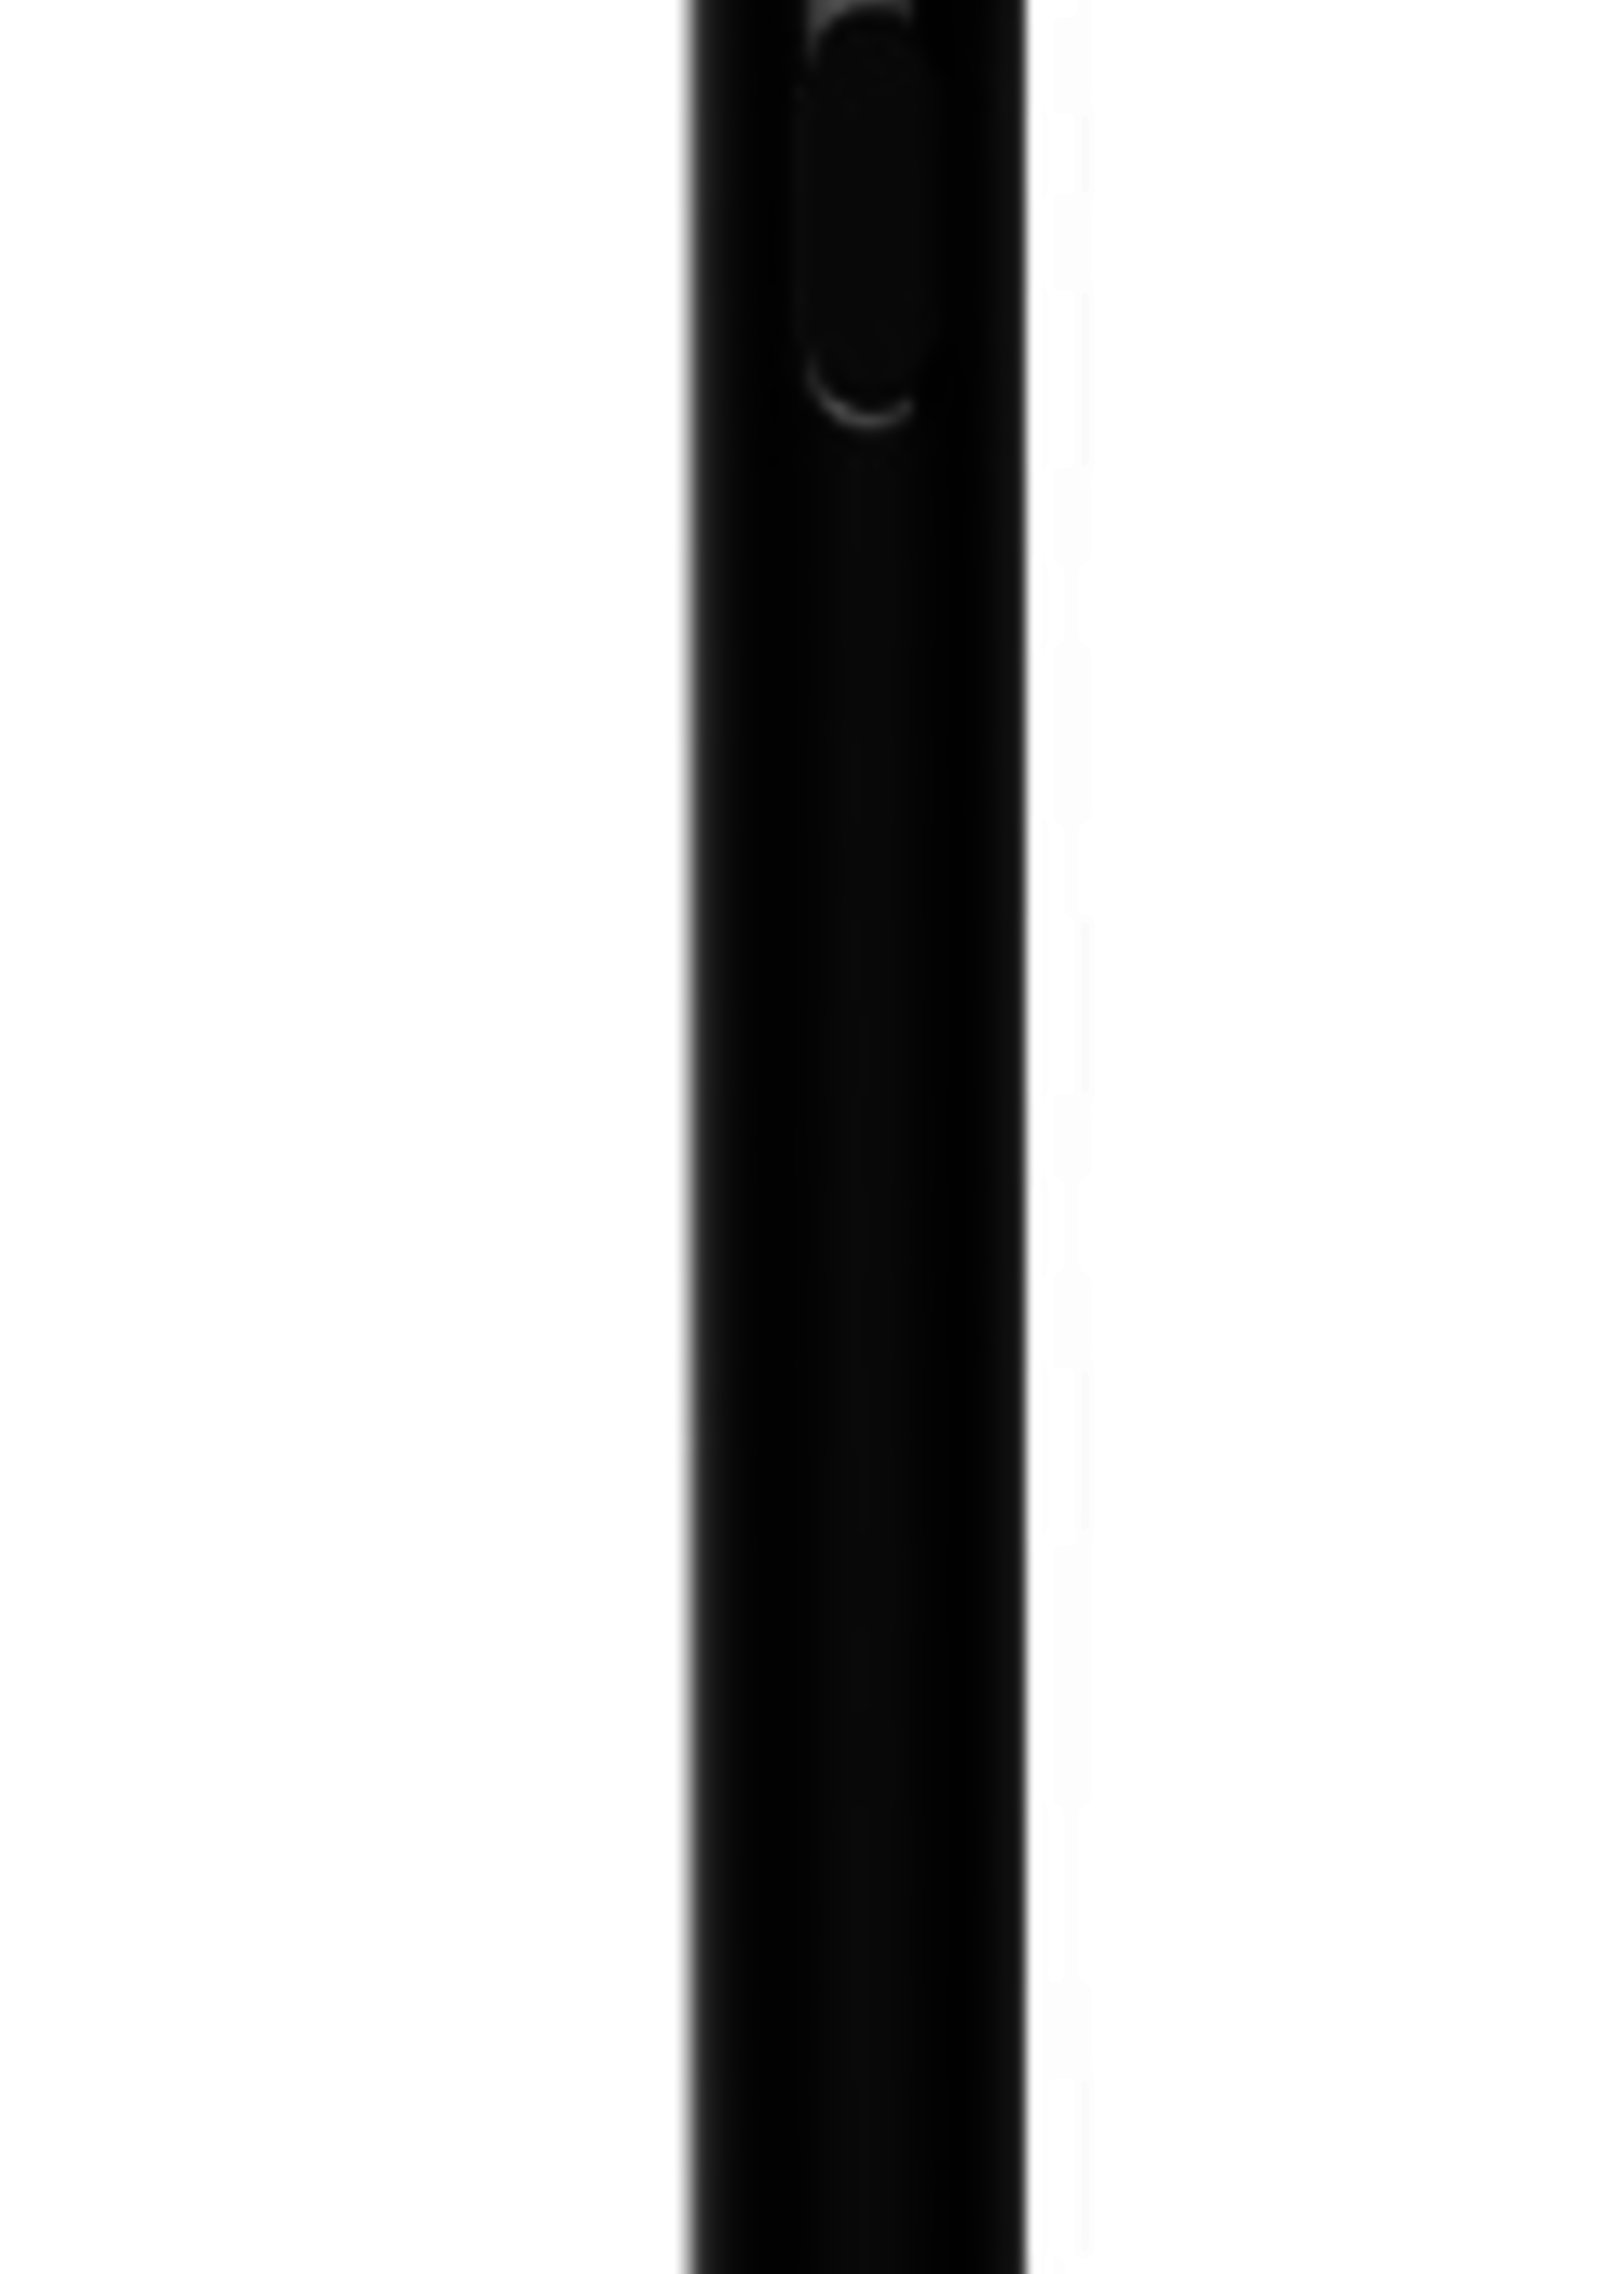 Apple Ultra Matte Hybrid Case For iPhone 11 (black)